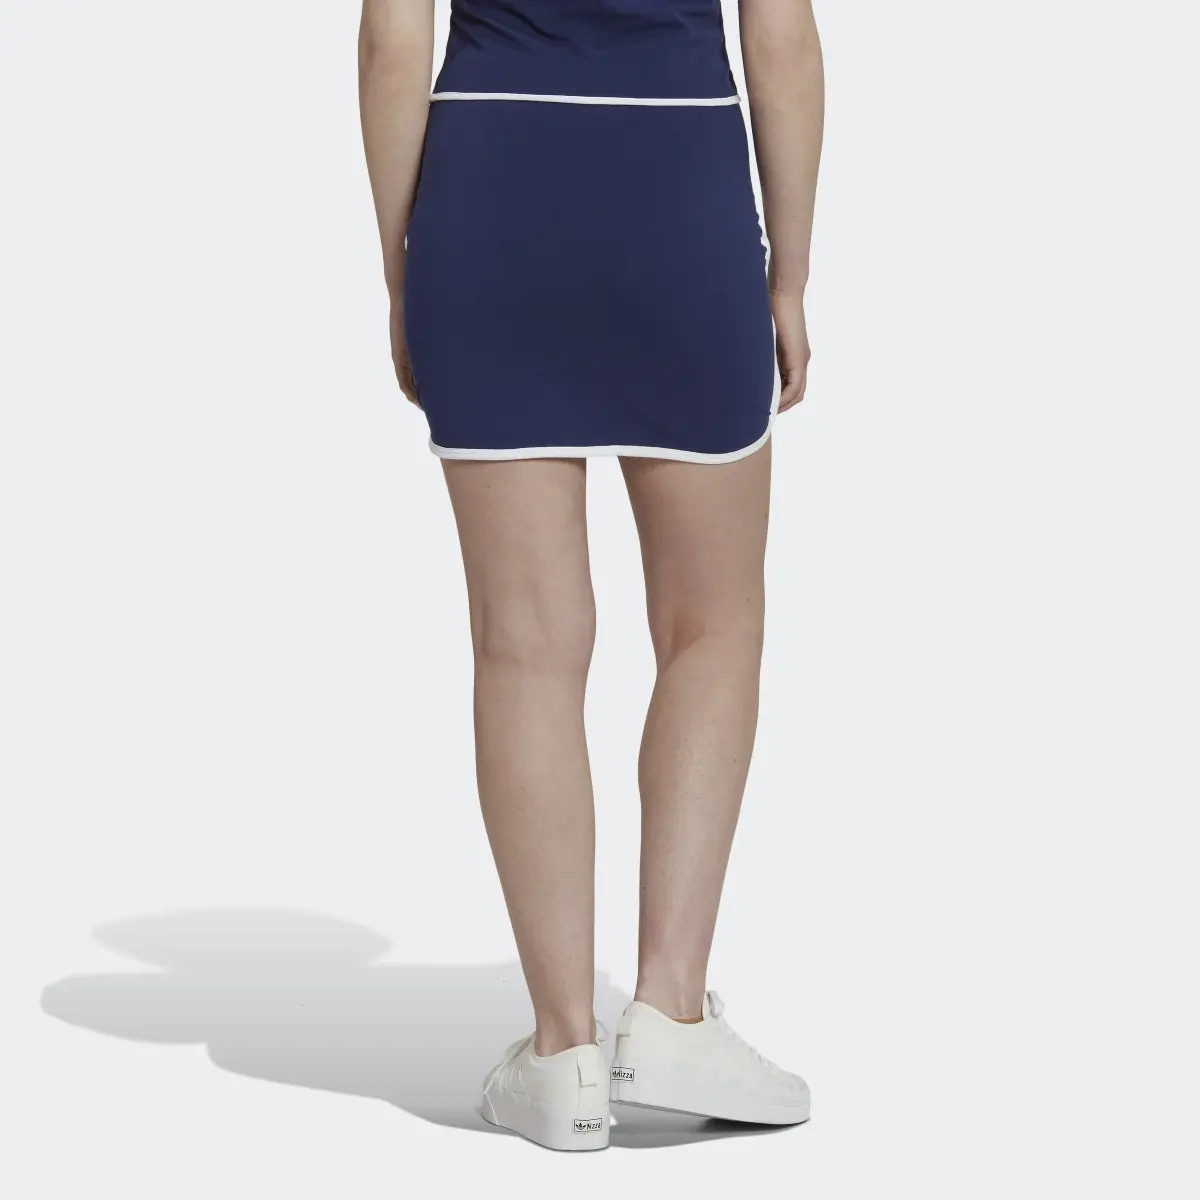 Adidas Mini Skirt with Binding Details. 2